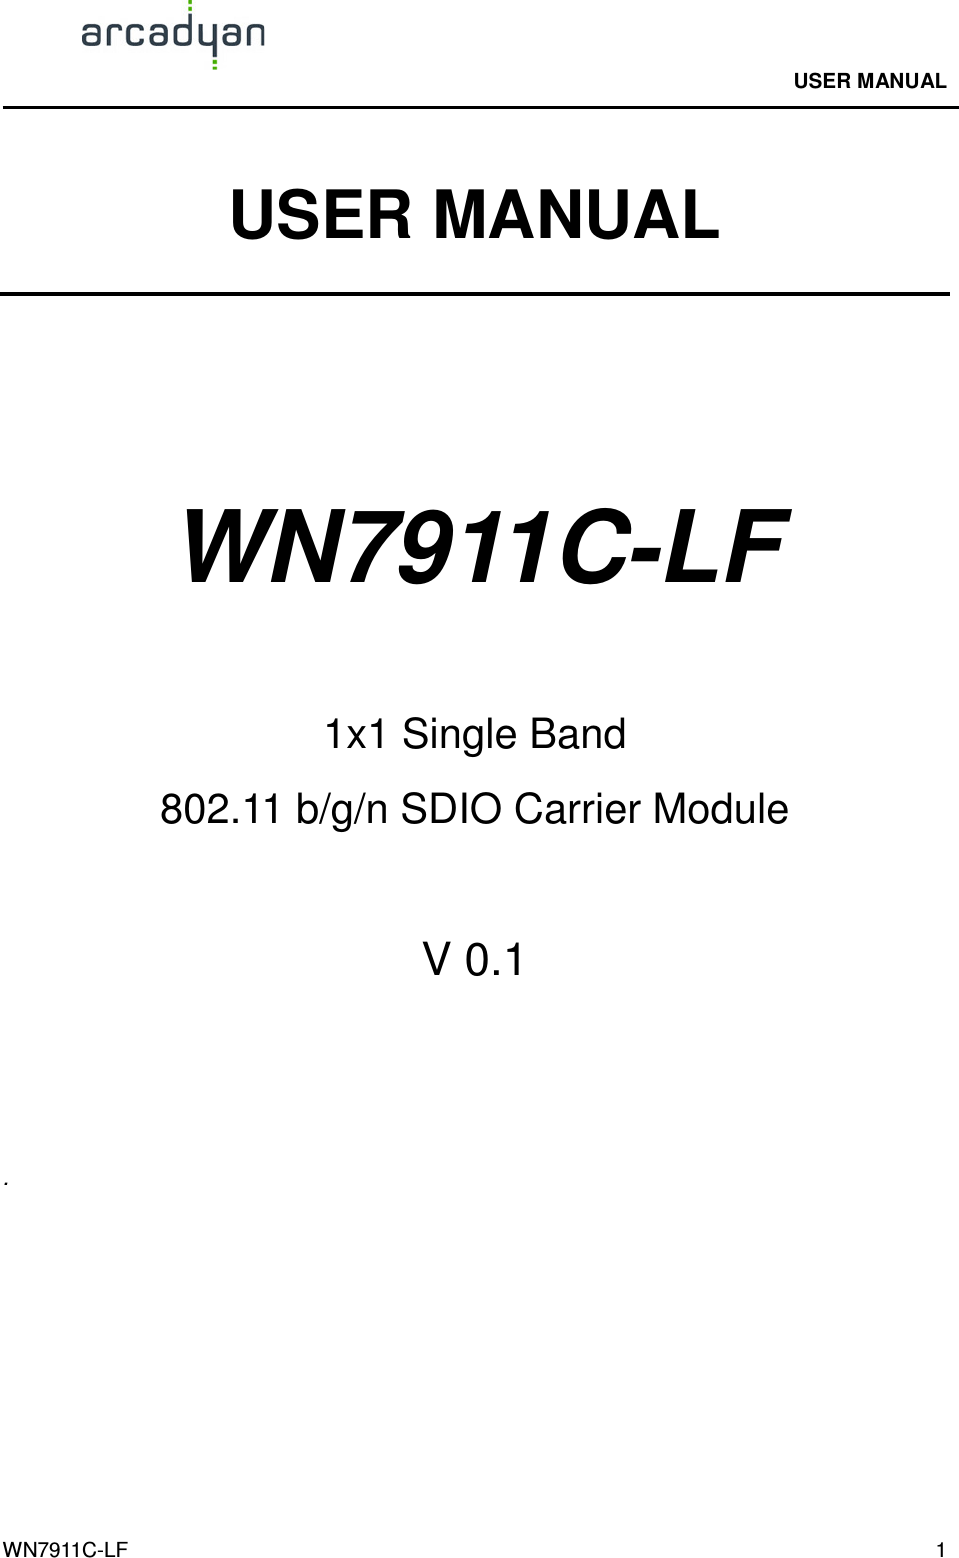                                              USER MANUAL                                              WN7911C-LF  1 USER MANUAL     WN7911C-LF   1x1 Single Band   802.11 b/g/n SDIO Carrier Module   V 0.1    . 